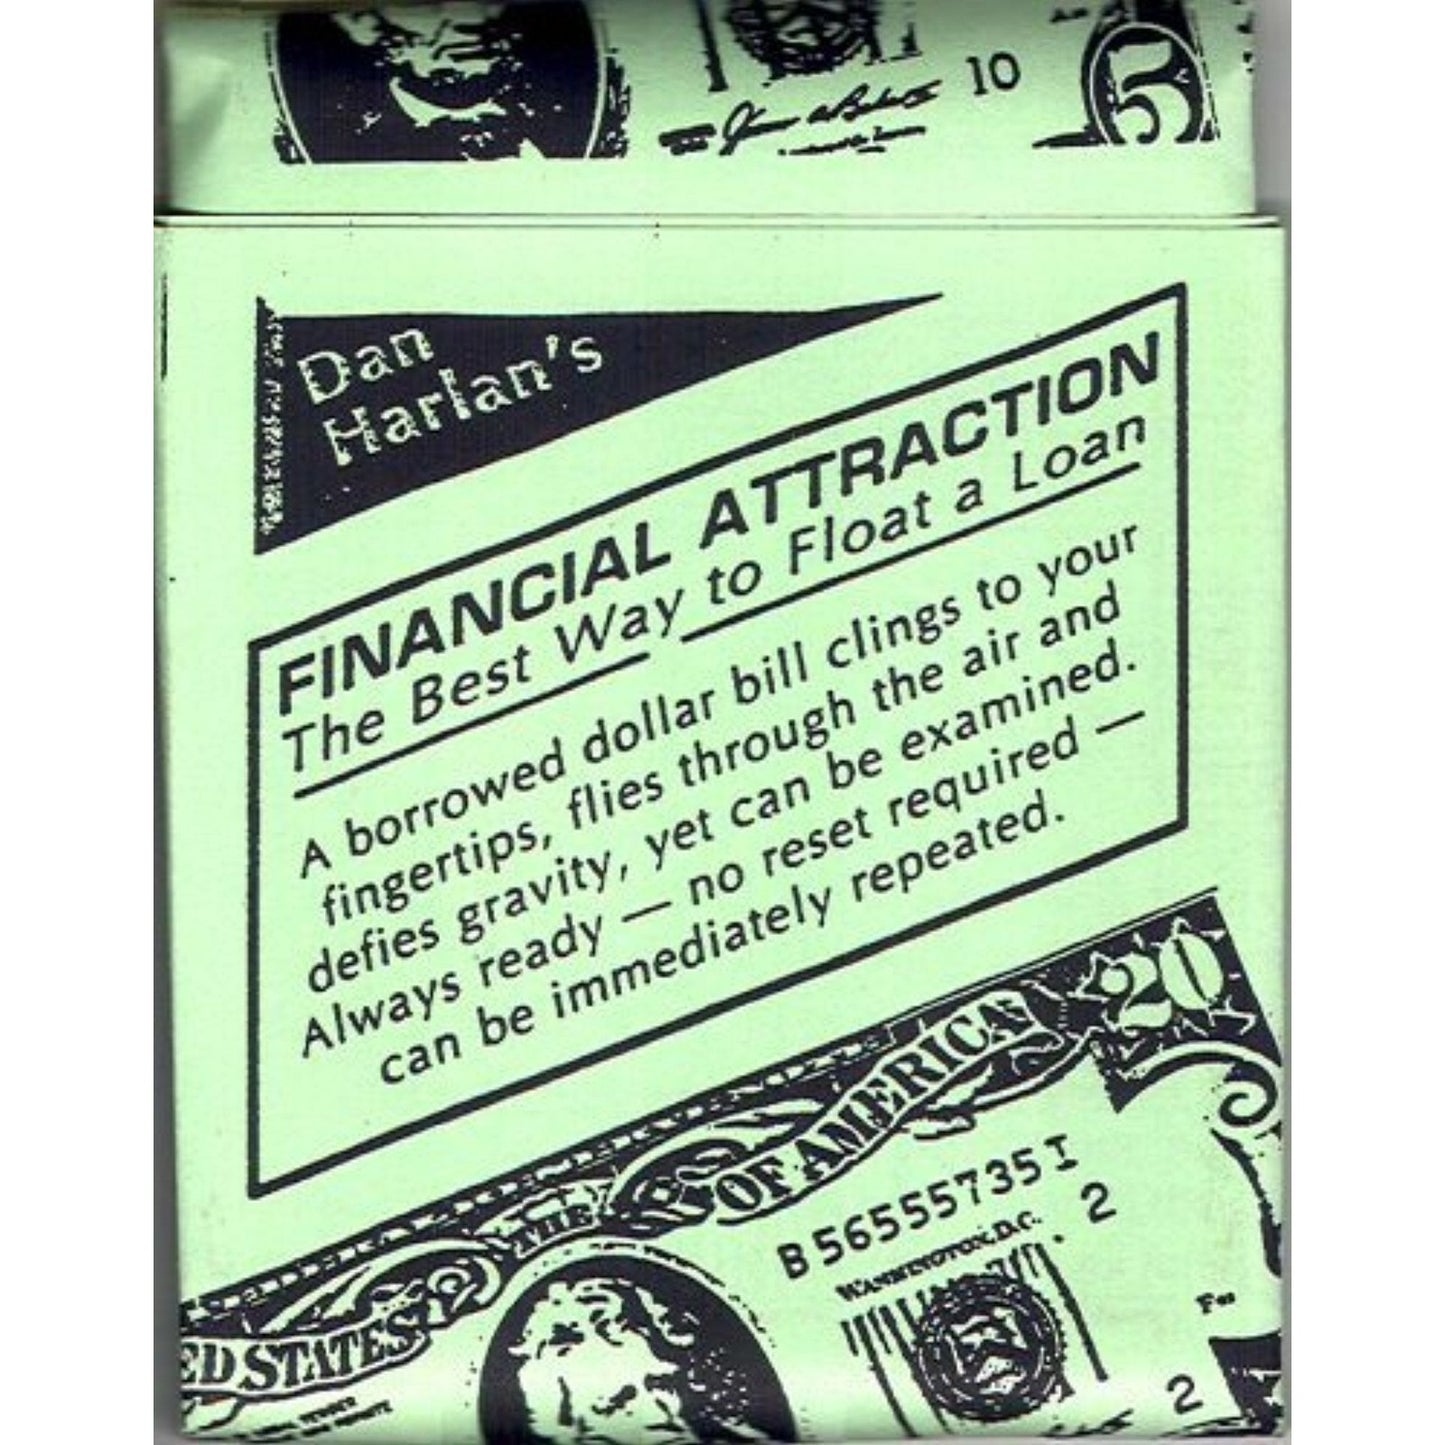 Financial Attraction by Dan Harlan